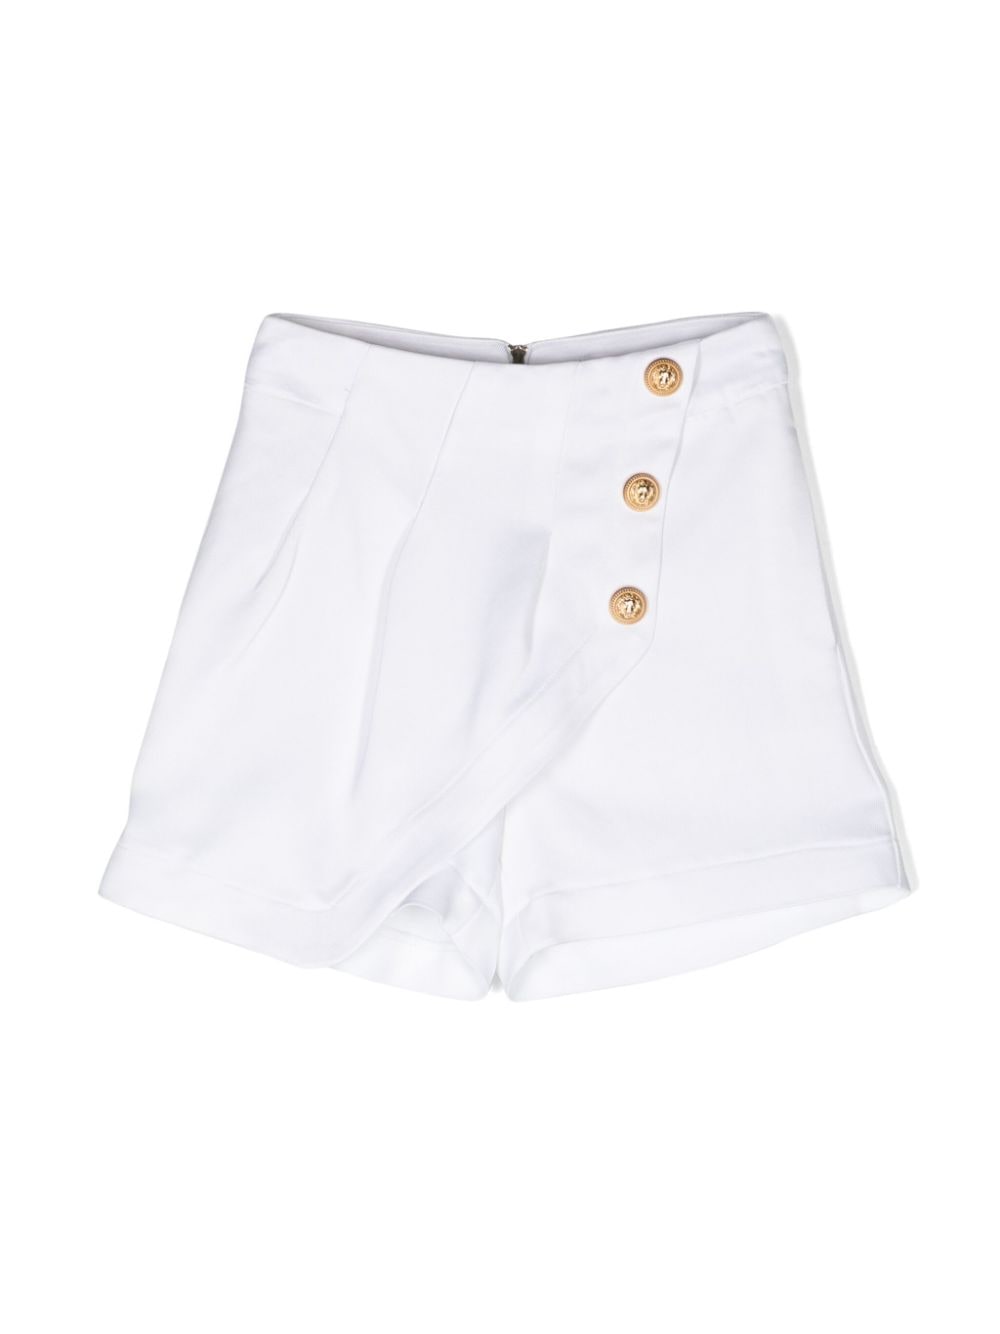 White Bermuda shorts for girls